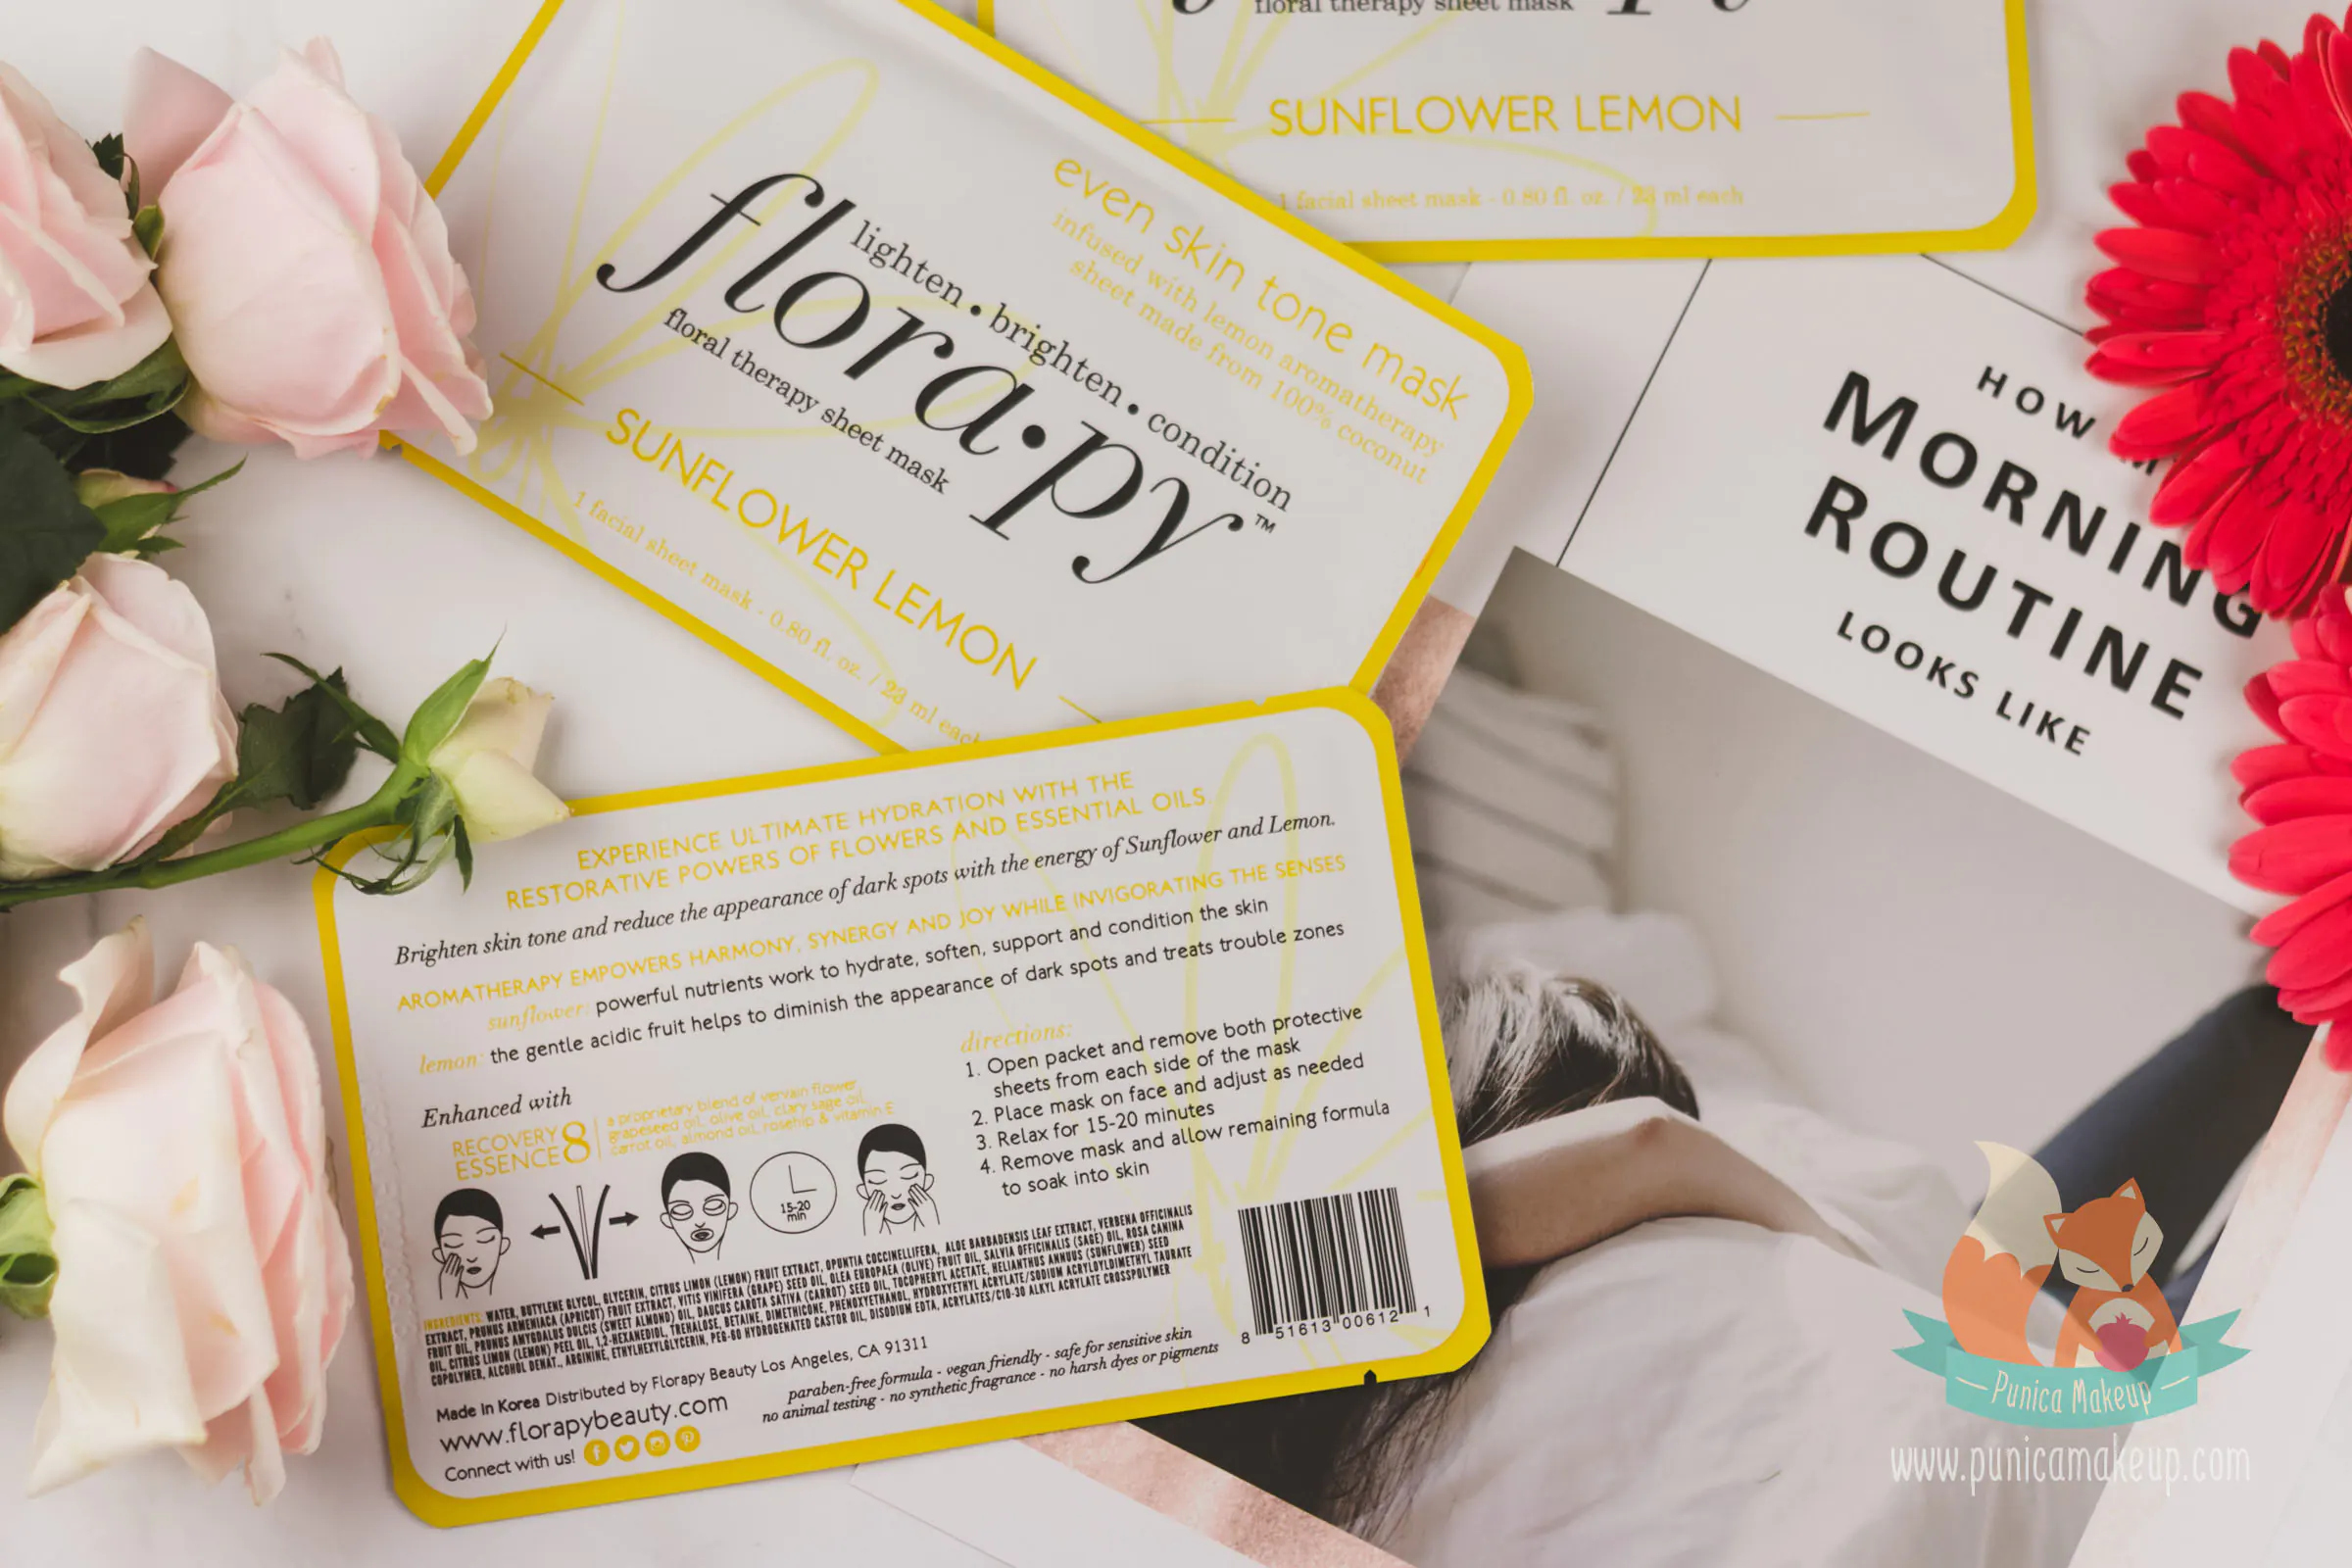 Review Florapy Beauty Even Skin Tone Sheet Mask Sunflower Lemon